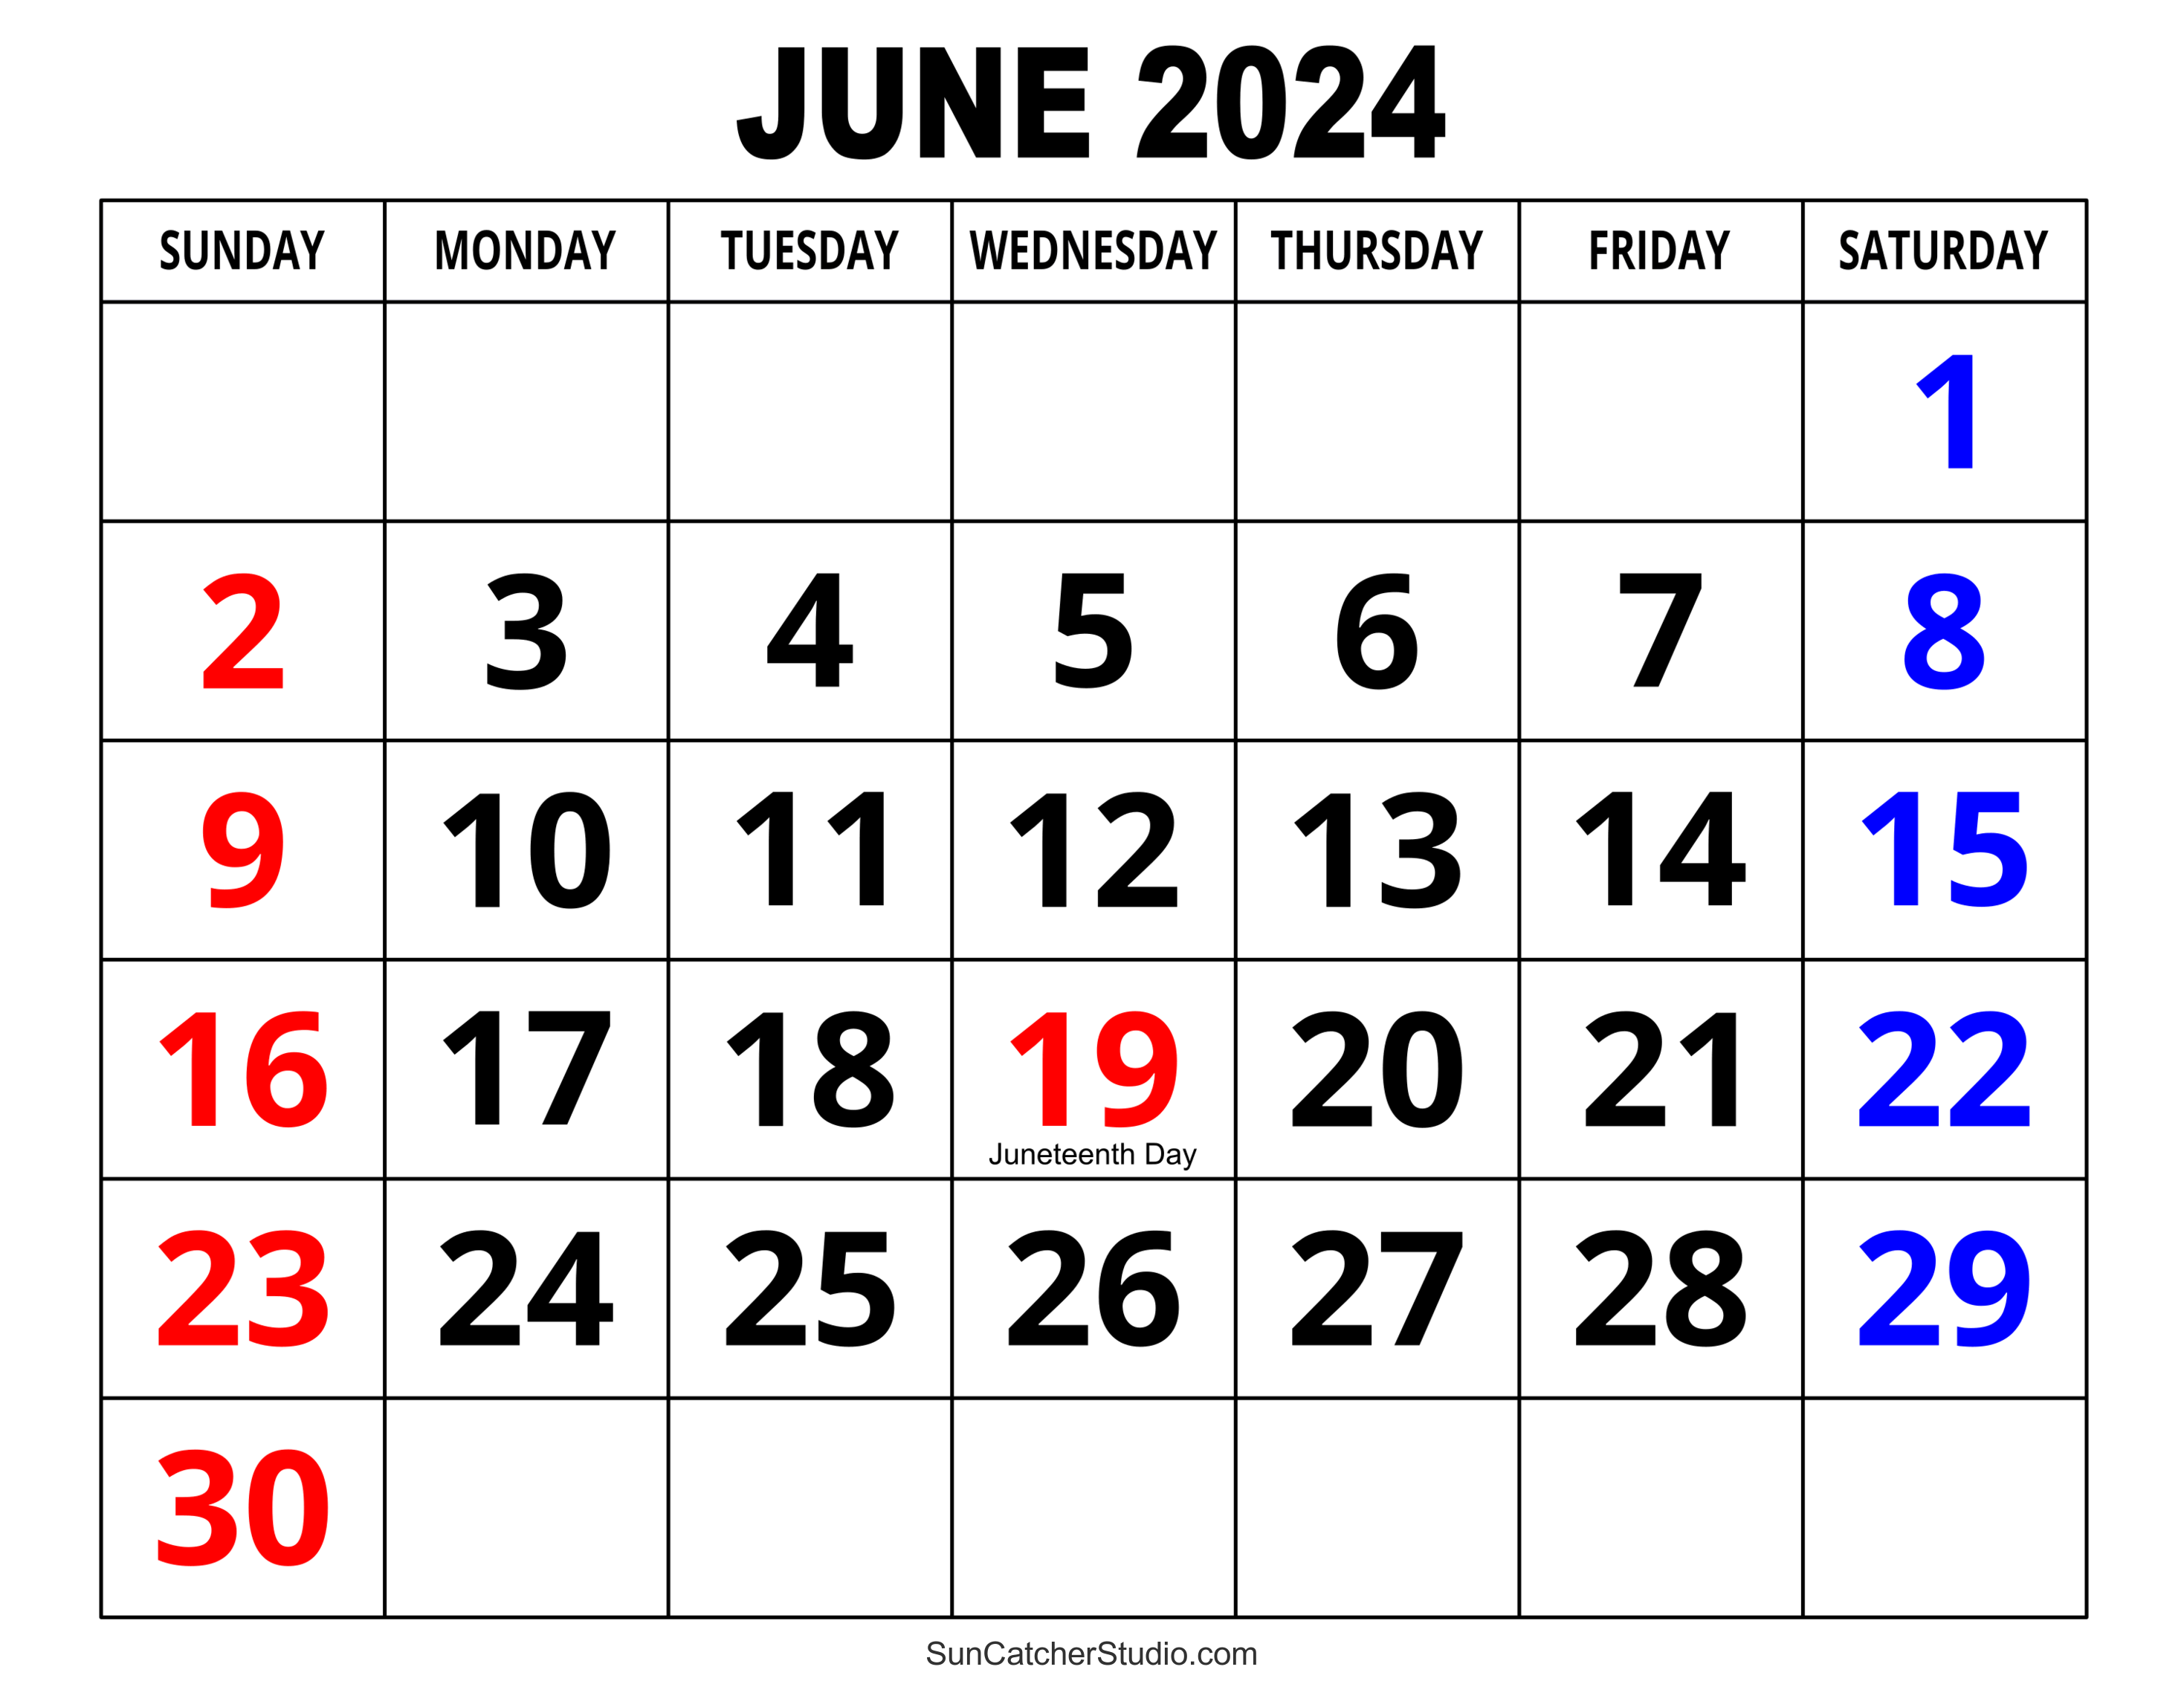 June 2024 Calendar (Free Printable) – Diy Projects, Patterns regarding Free Printable Calendar 2024 June With Holidays